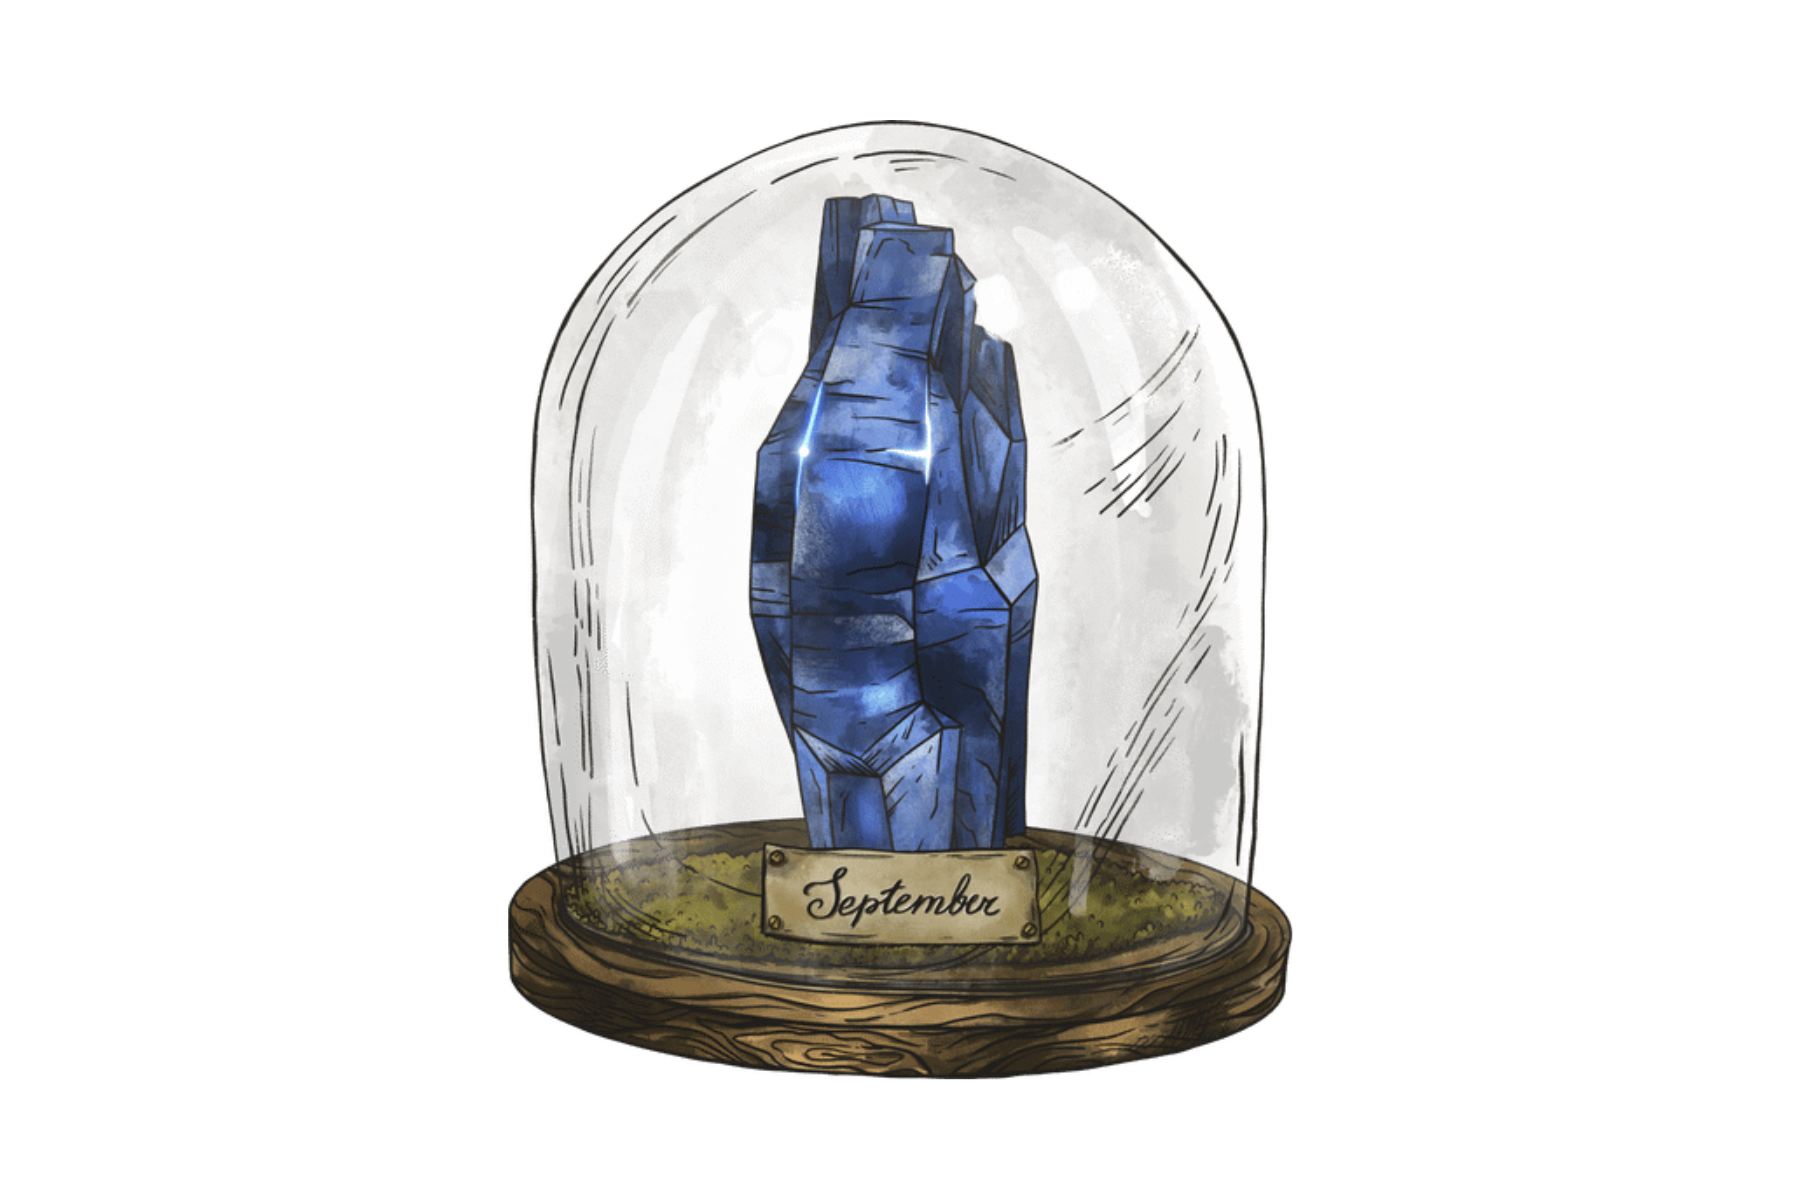 A glass jar with a sapphire birthstone